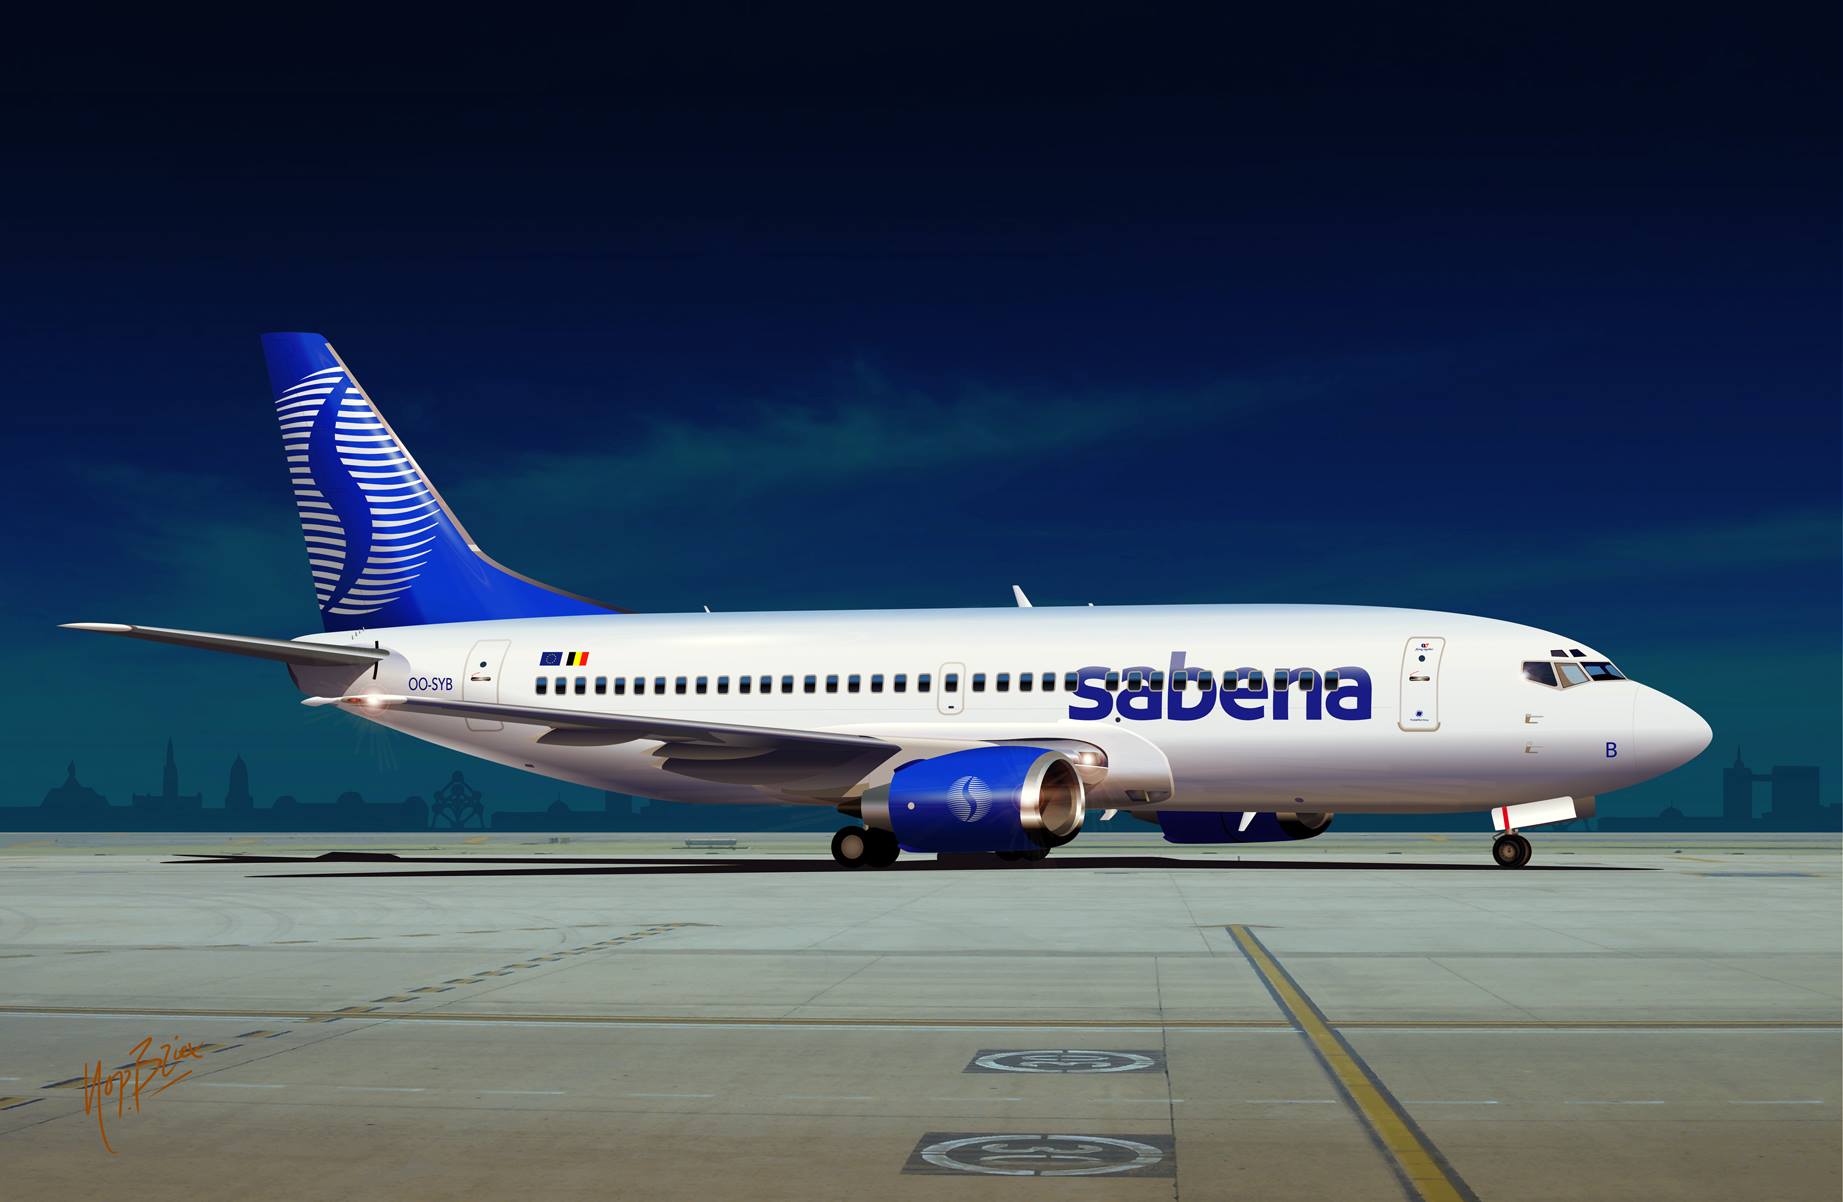 Airline of This European Country Logo - Sabena